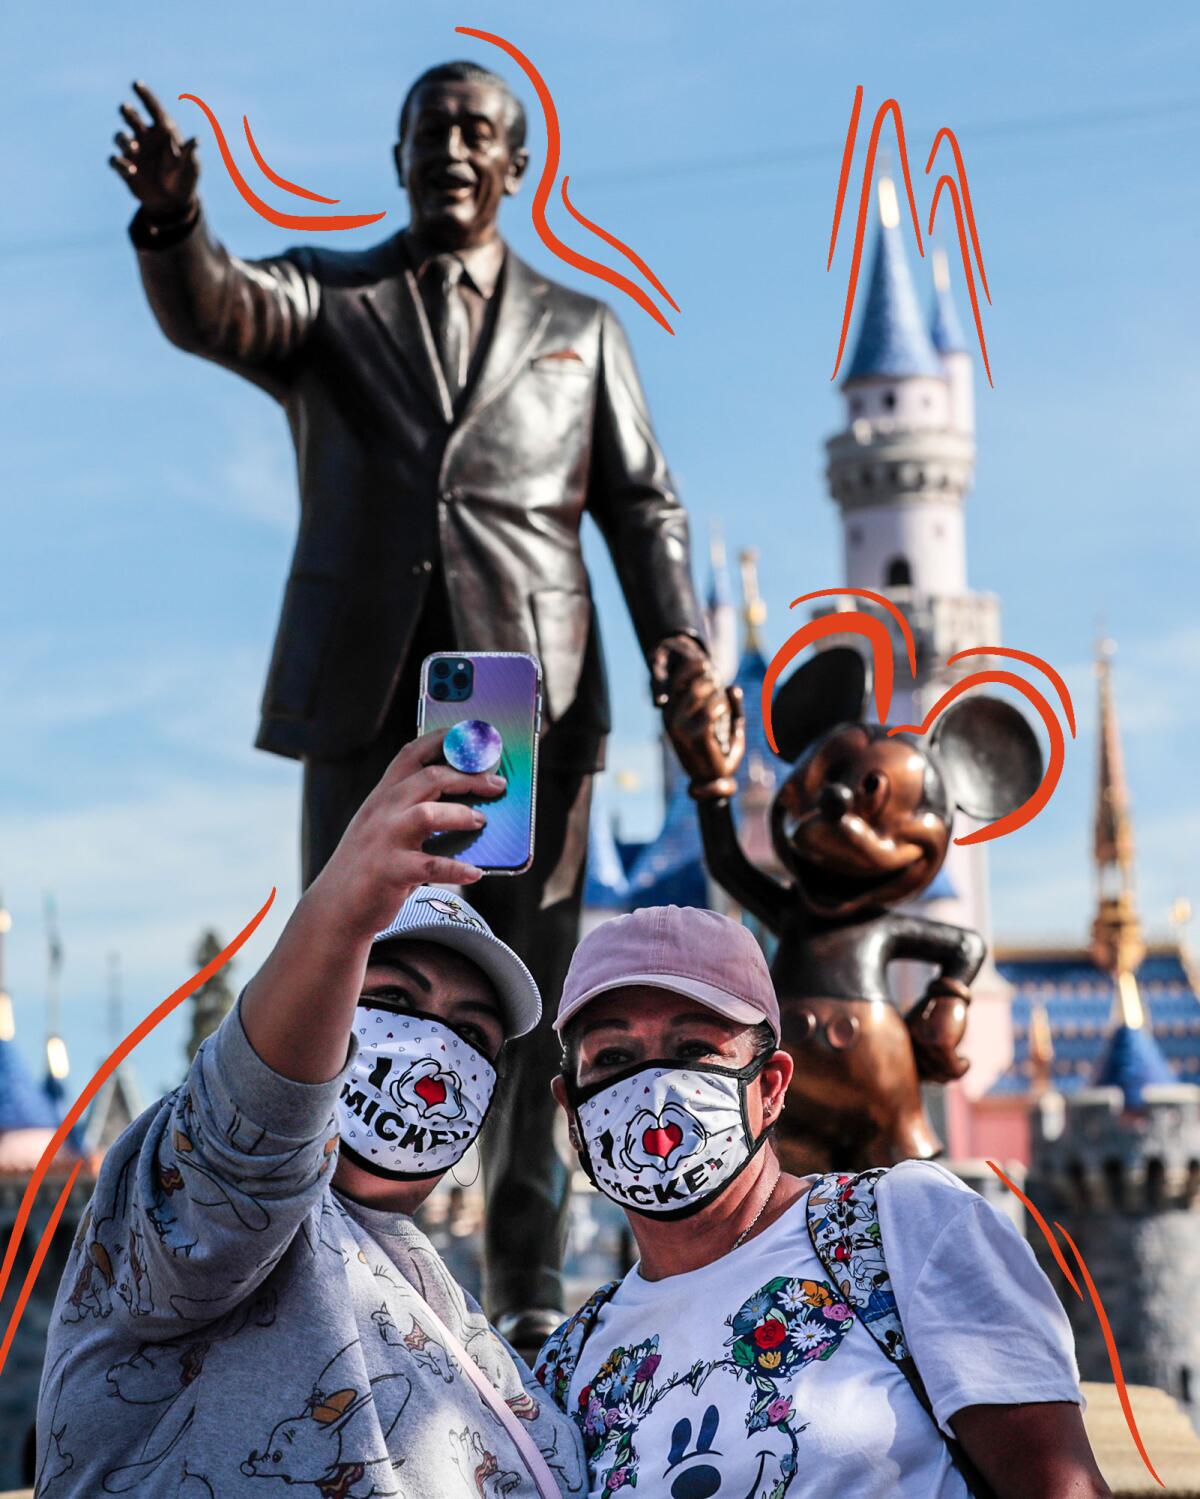 Park visitors take a selfie in front of the Walt Disney statue inside Disneyland.